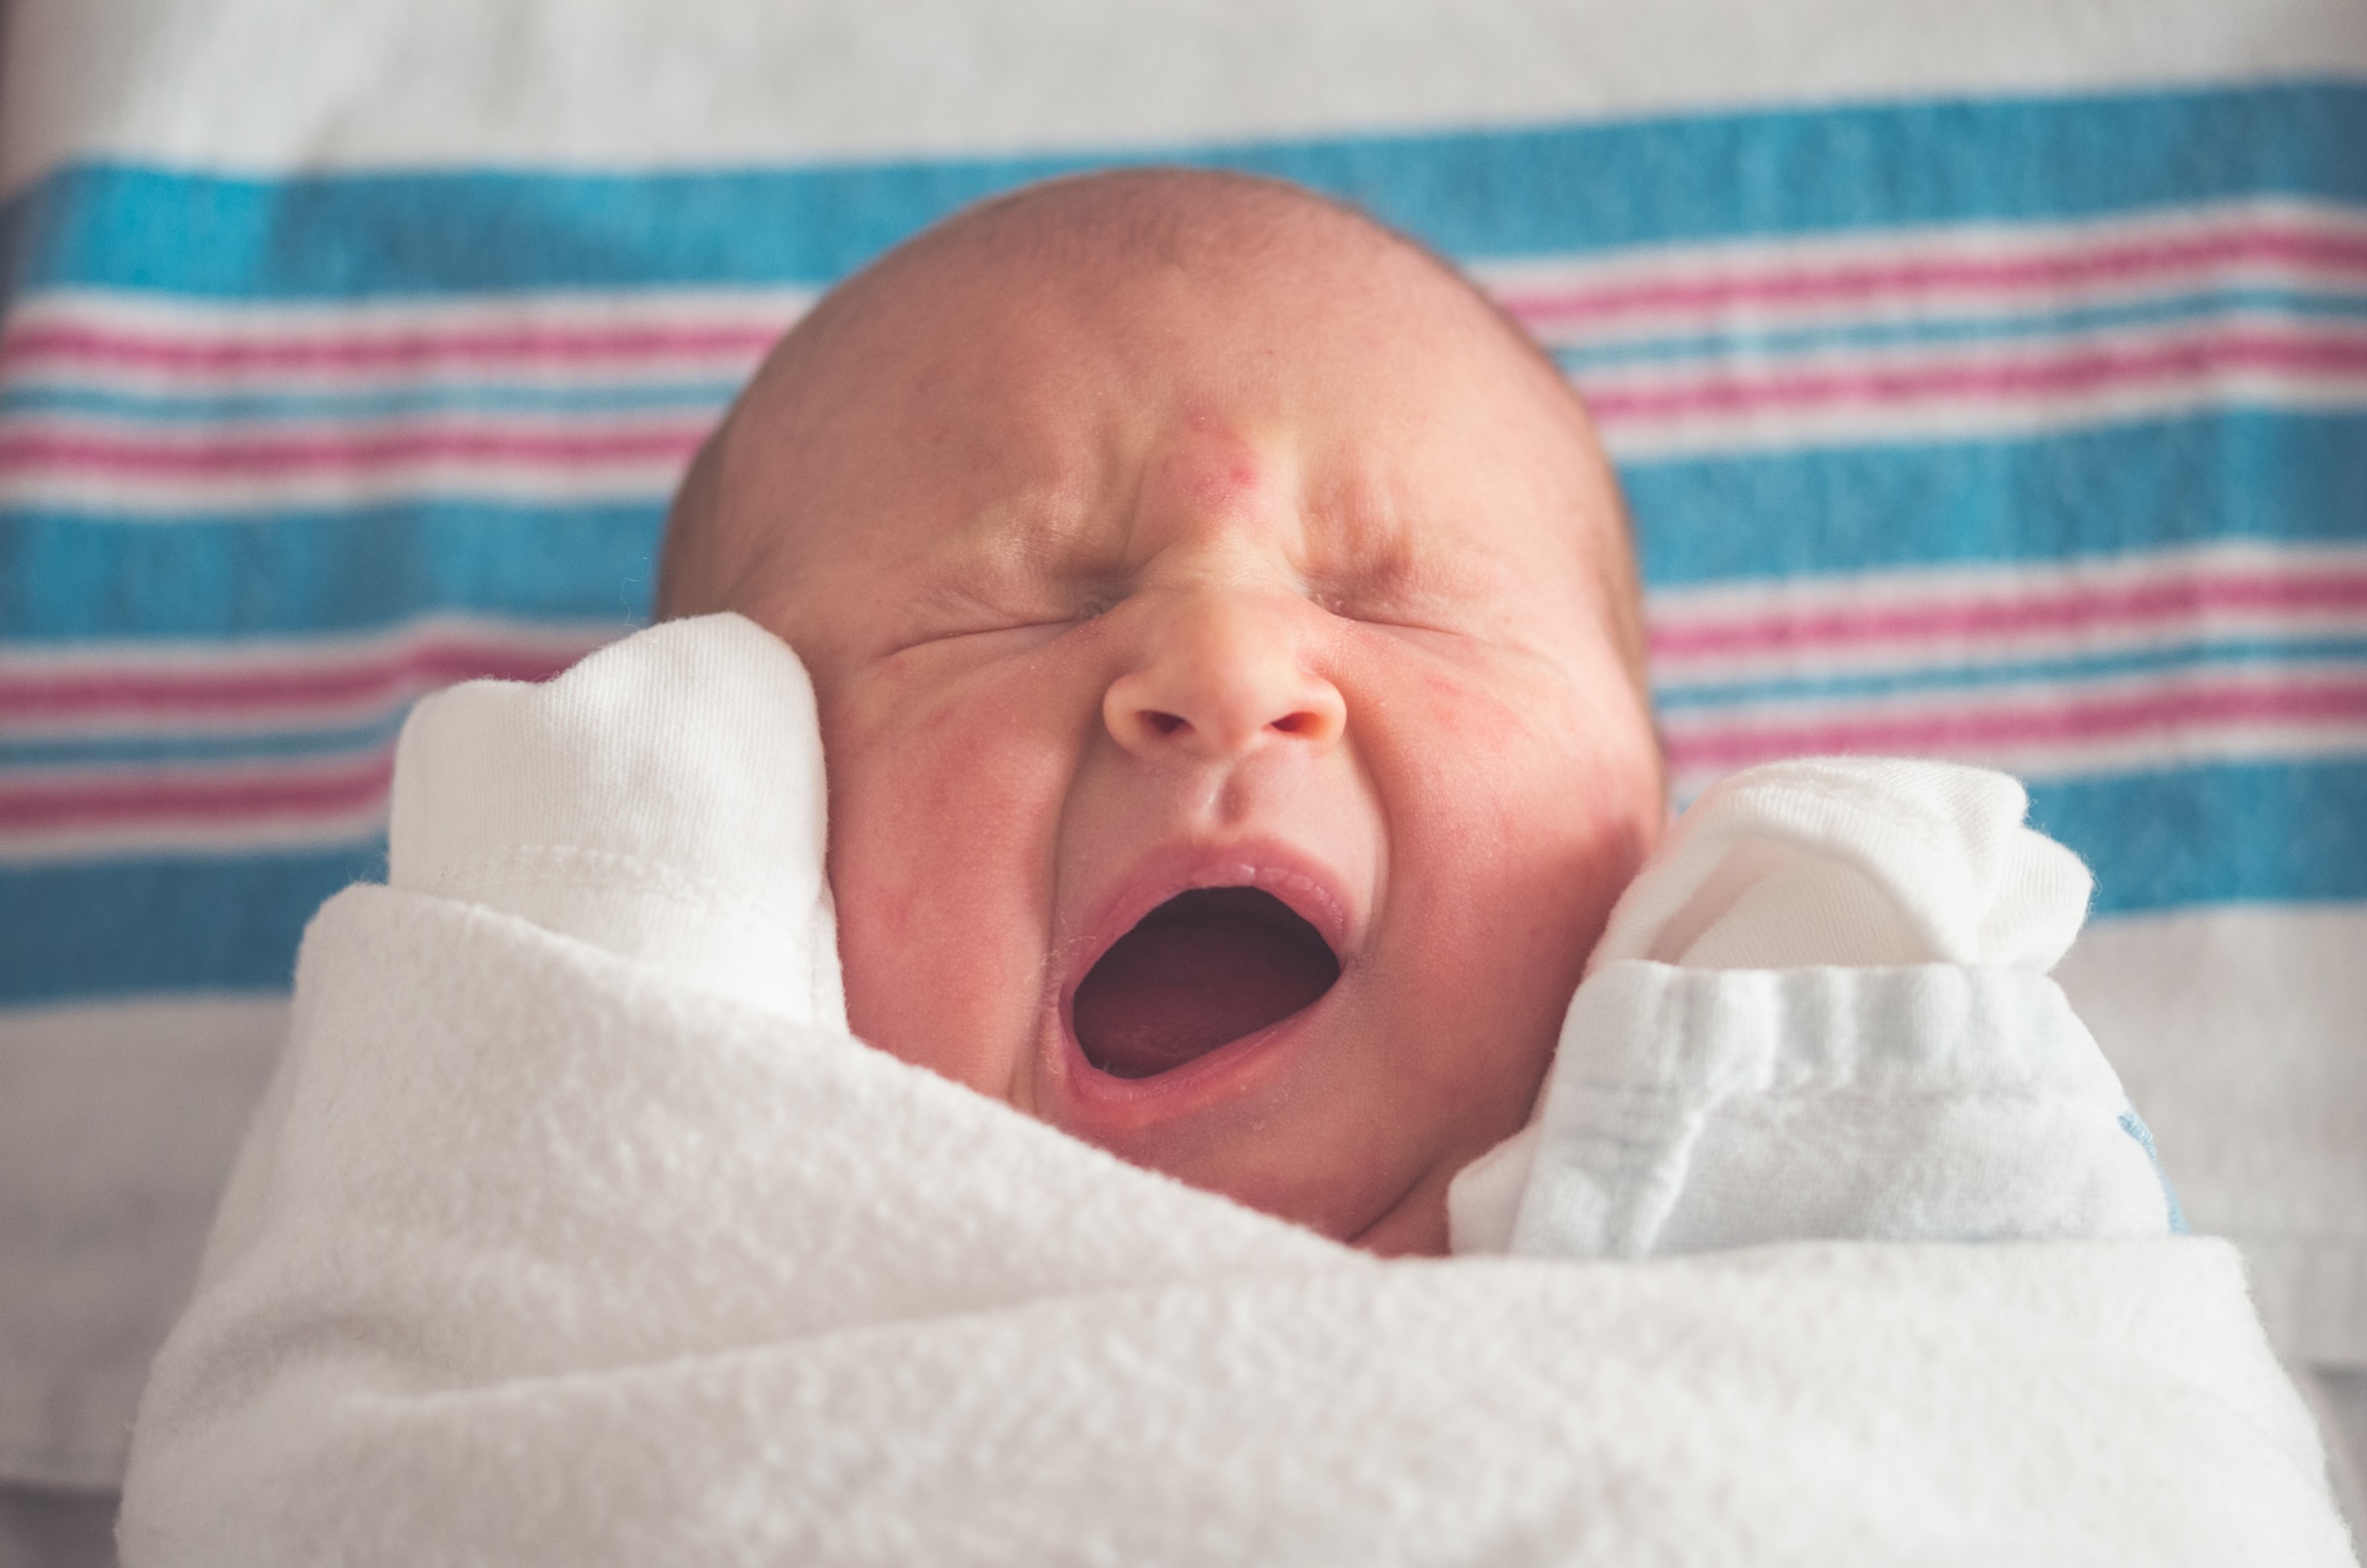 Newborn baby yawning | Source: Unsplash